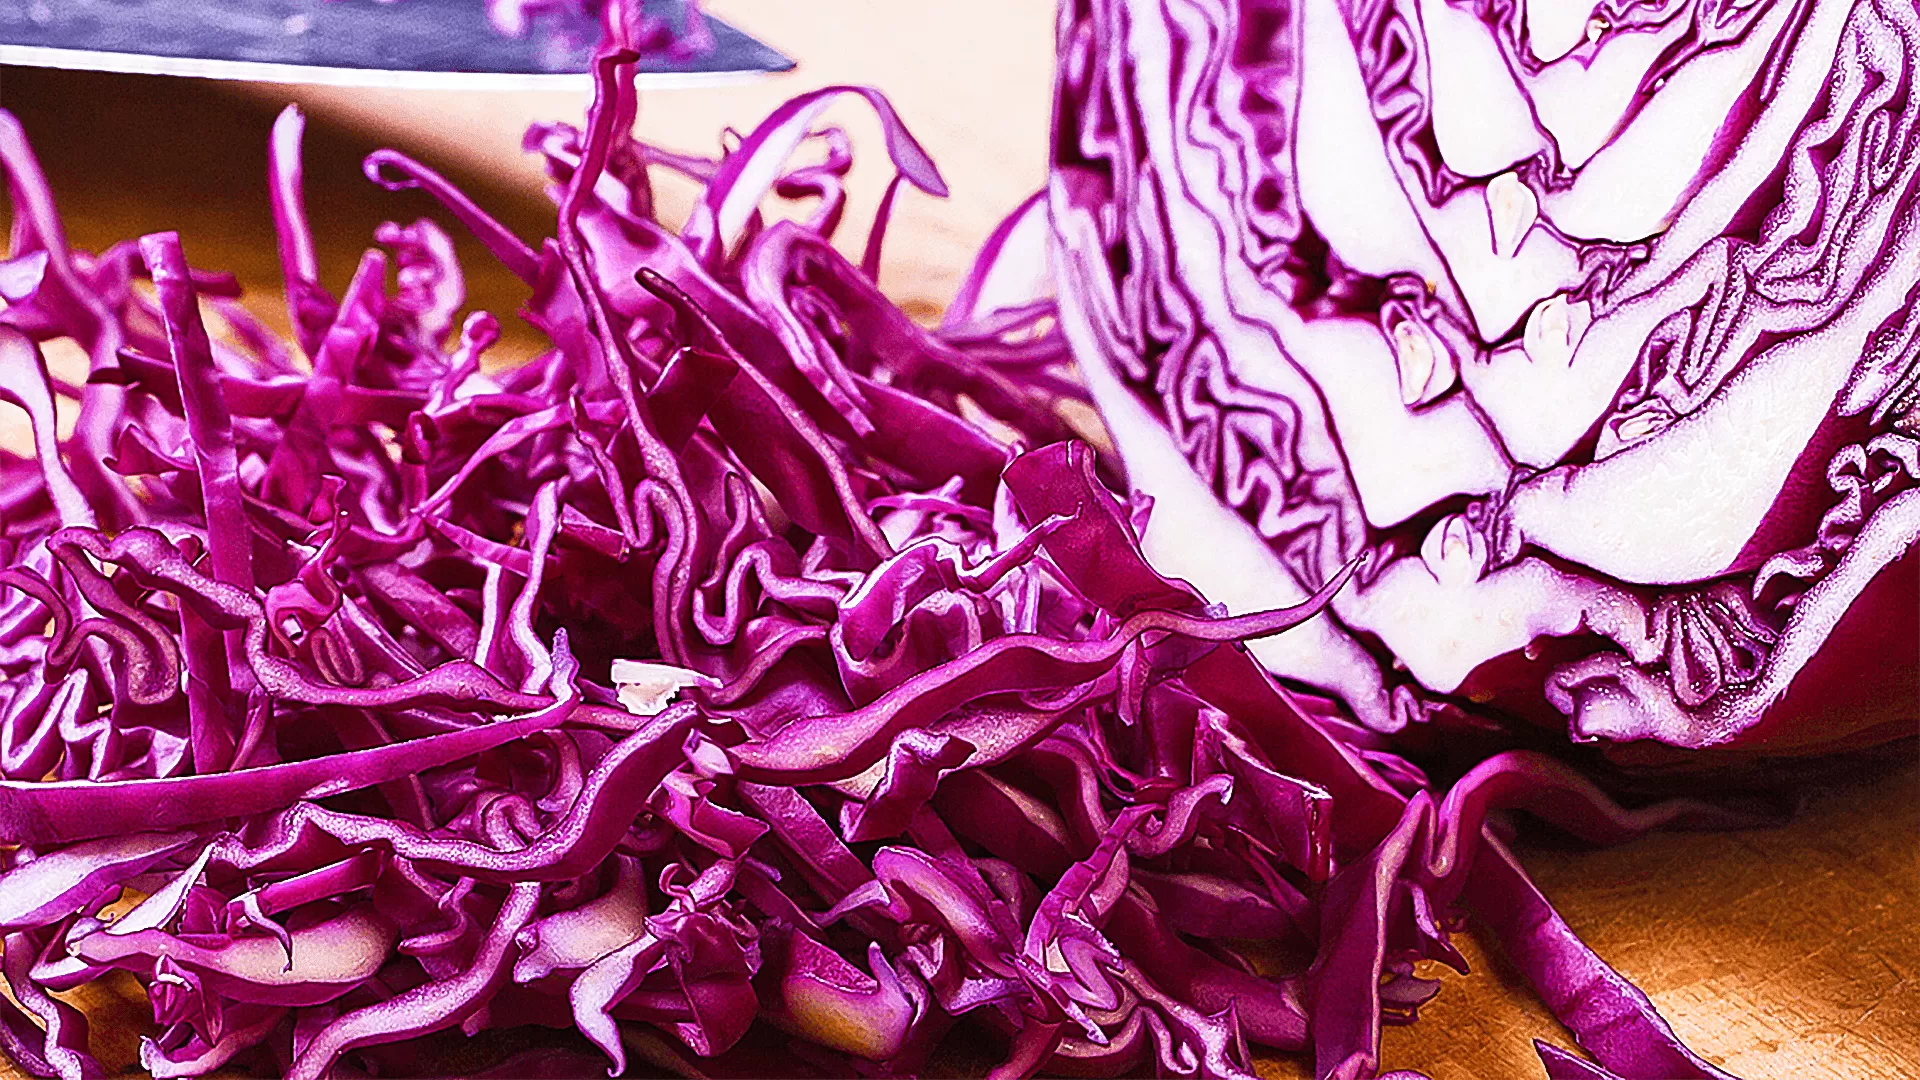 Raw Purple Cabbage Salad with Vinegar